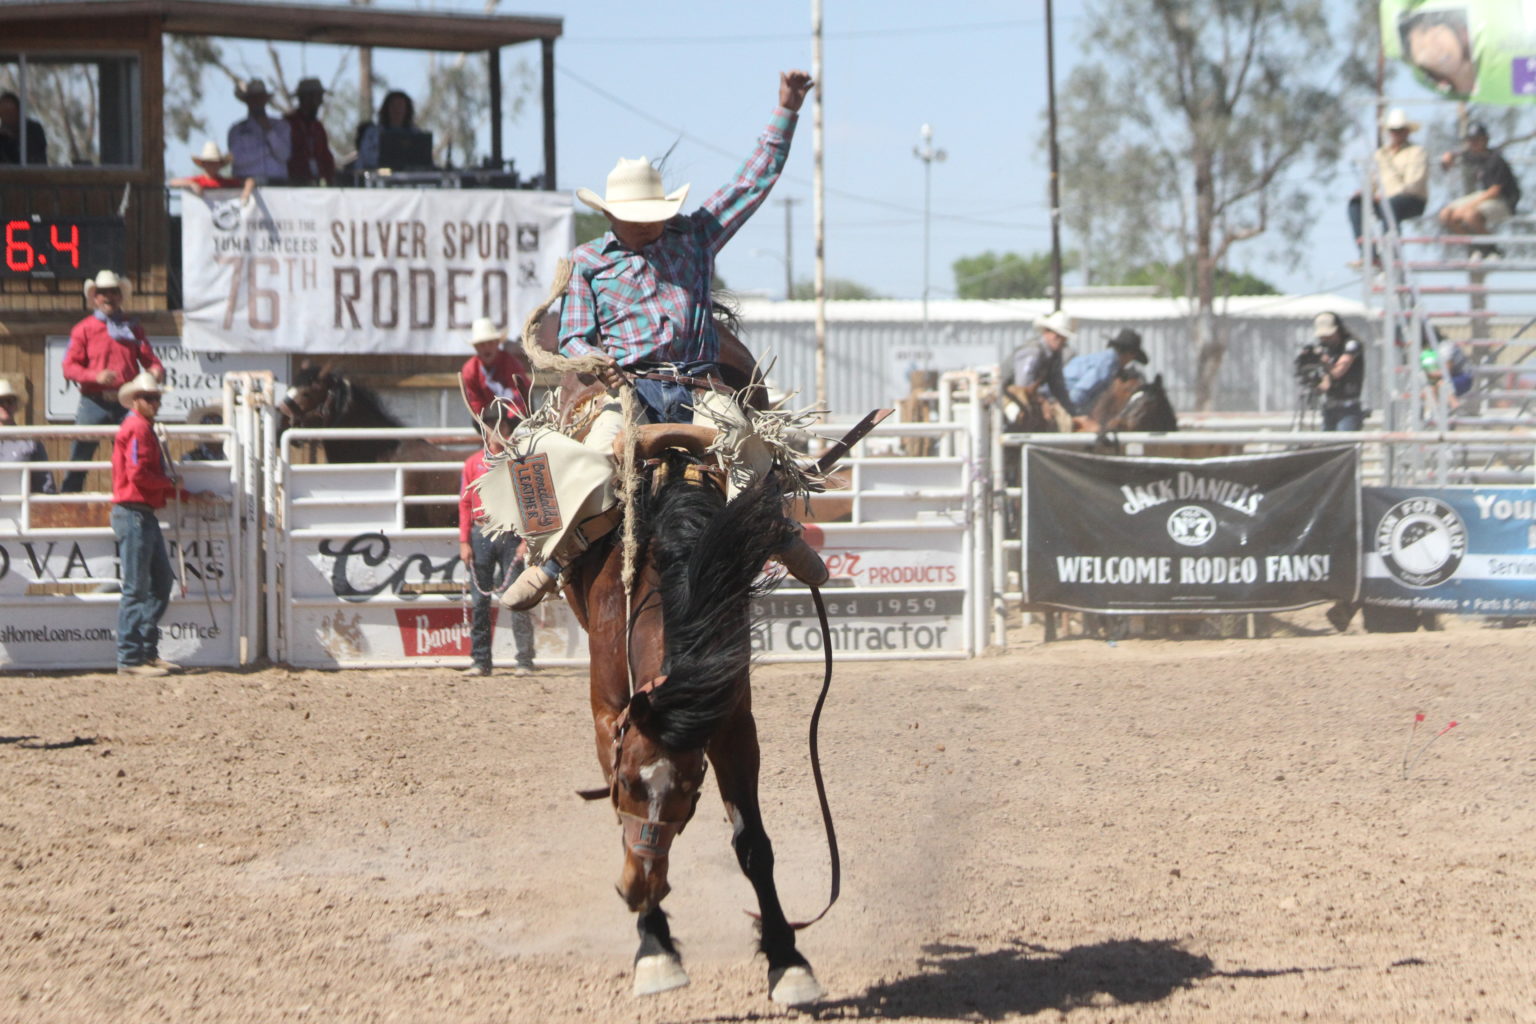 77th Annual Yuma Silver Spur Rodeo 2022 - Cowboy Lifestyle Network